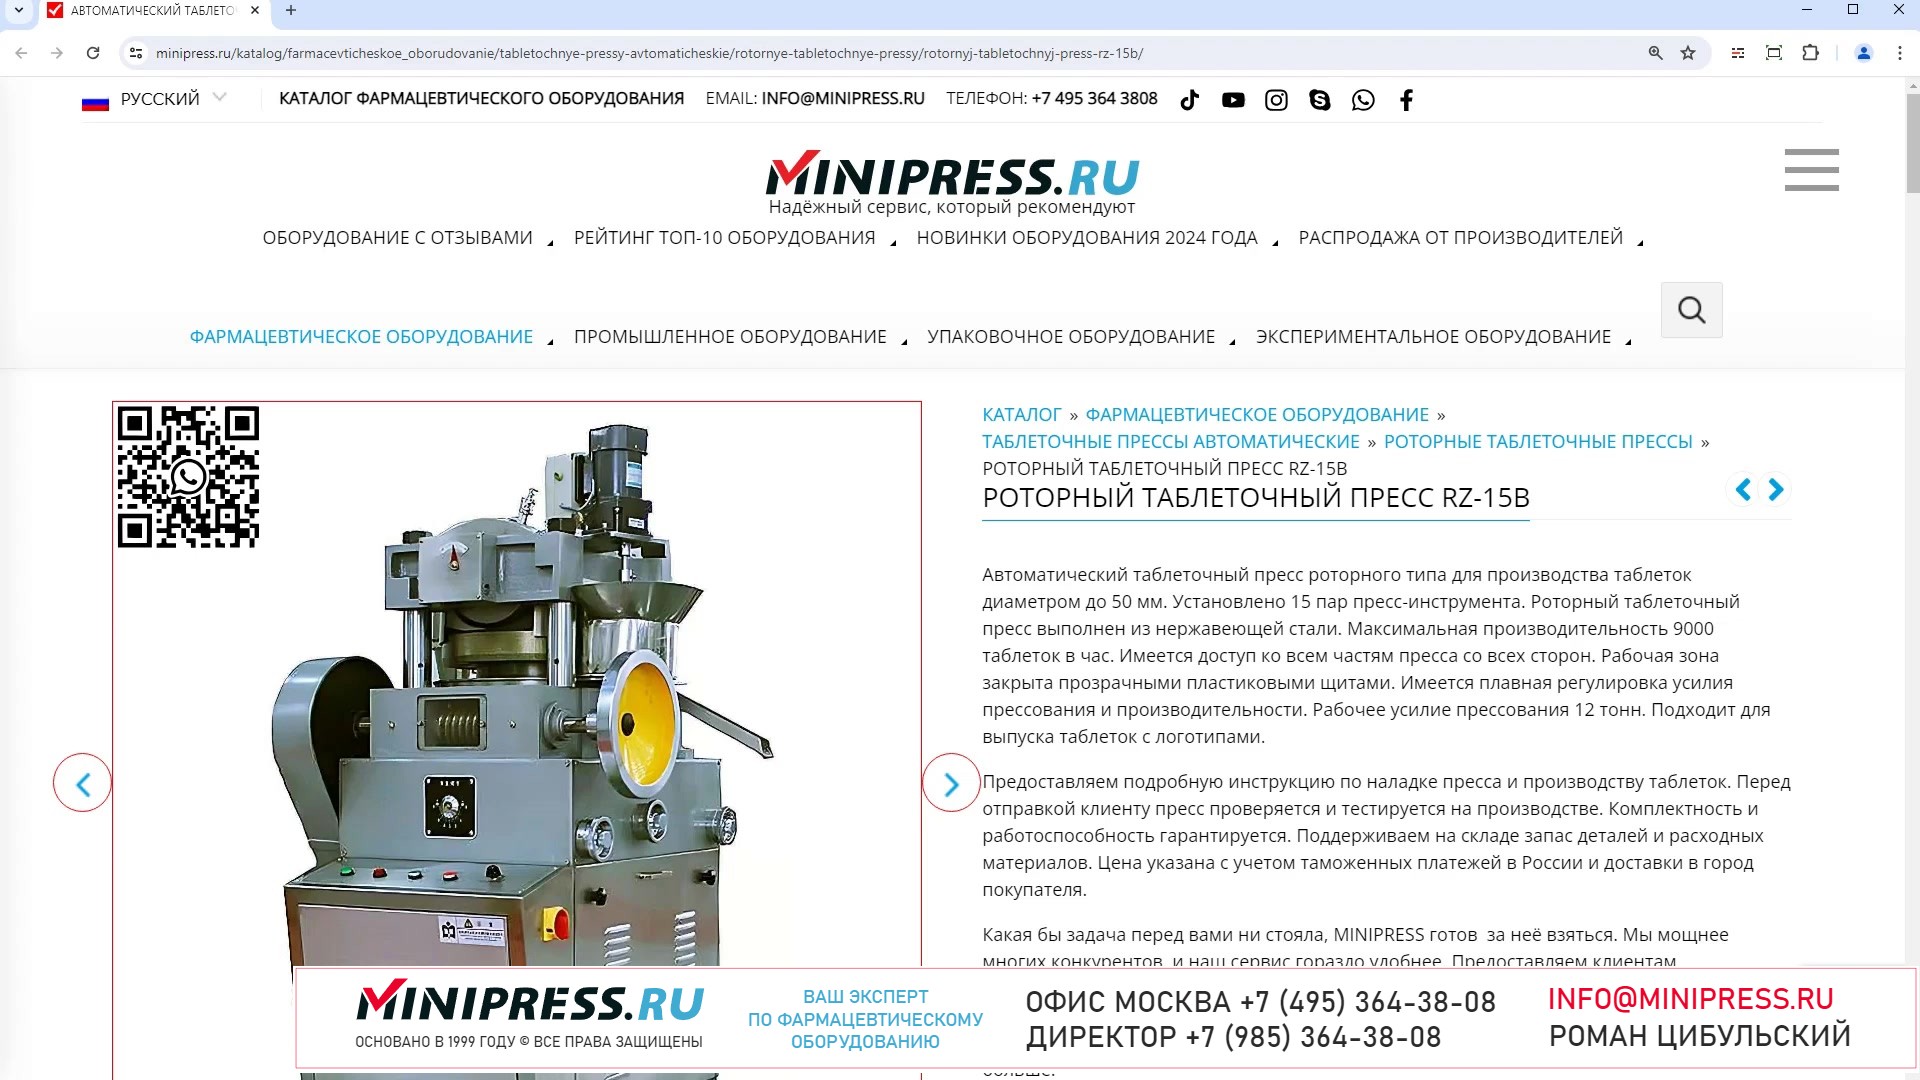 Minipress.ru Роторный таблеточный пресс RZ-15B